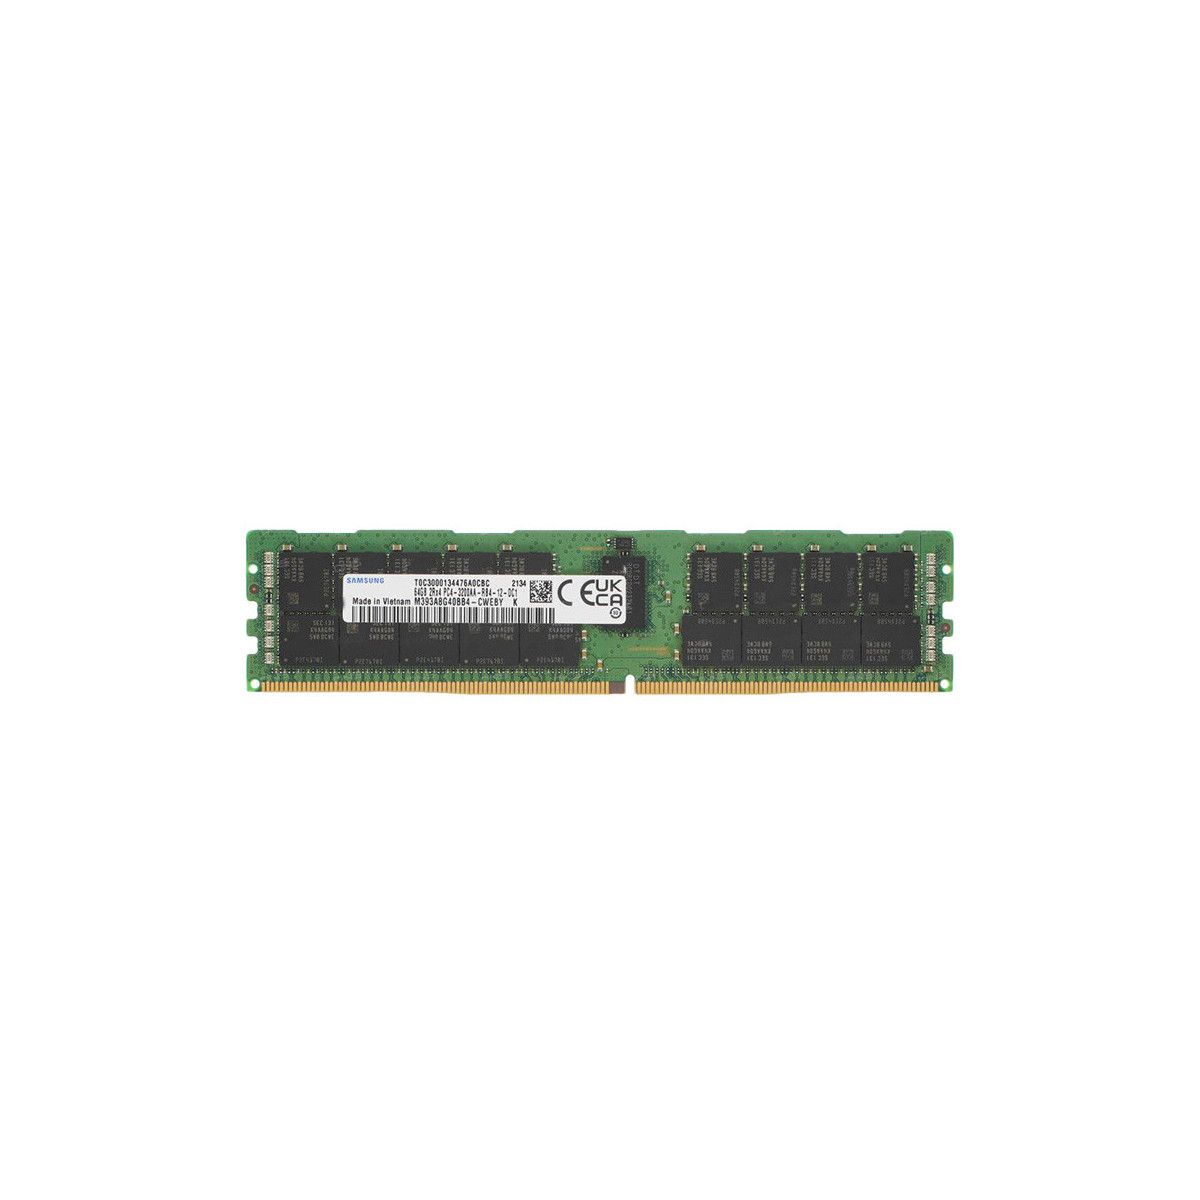 UCS-MR-X64G2RW-MS - Memstar 1x 64GB DDR4-3200 RDIMM PC4-25600R - Mem-Star Kompatybilna pamięć OEM 1 - Memstar 